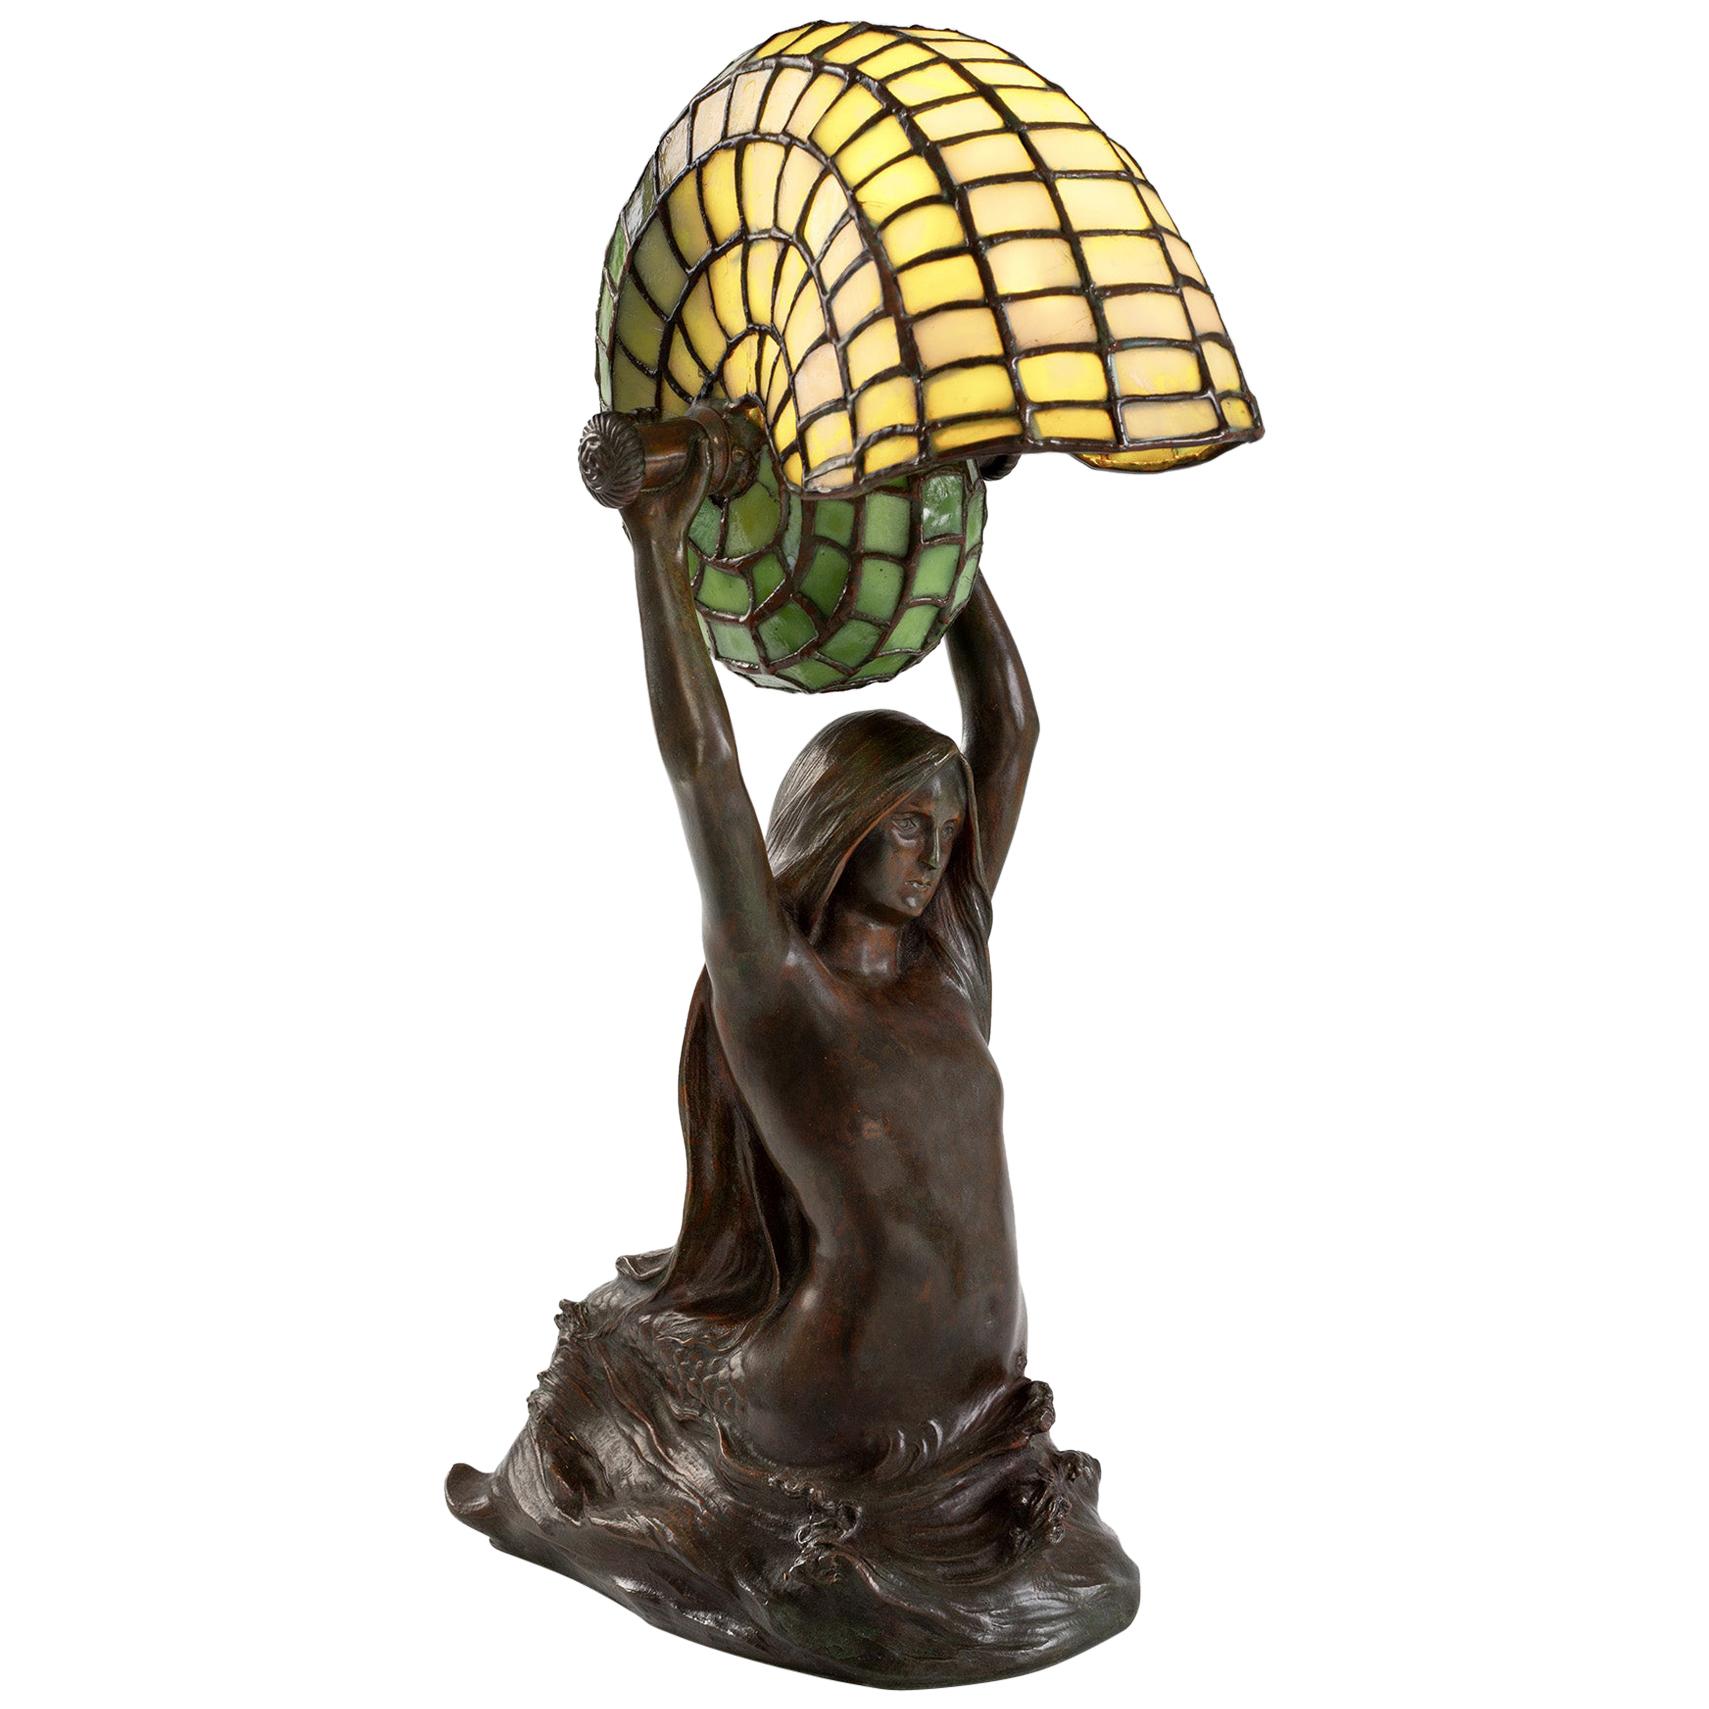 Tiffany Studios New York "Nautilus" Table Lamp with "Mermaid" Base